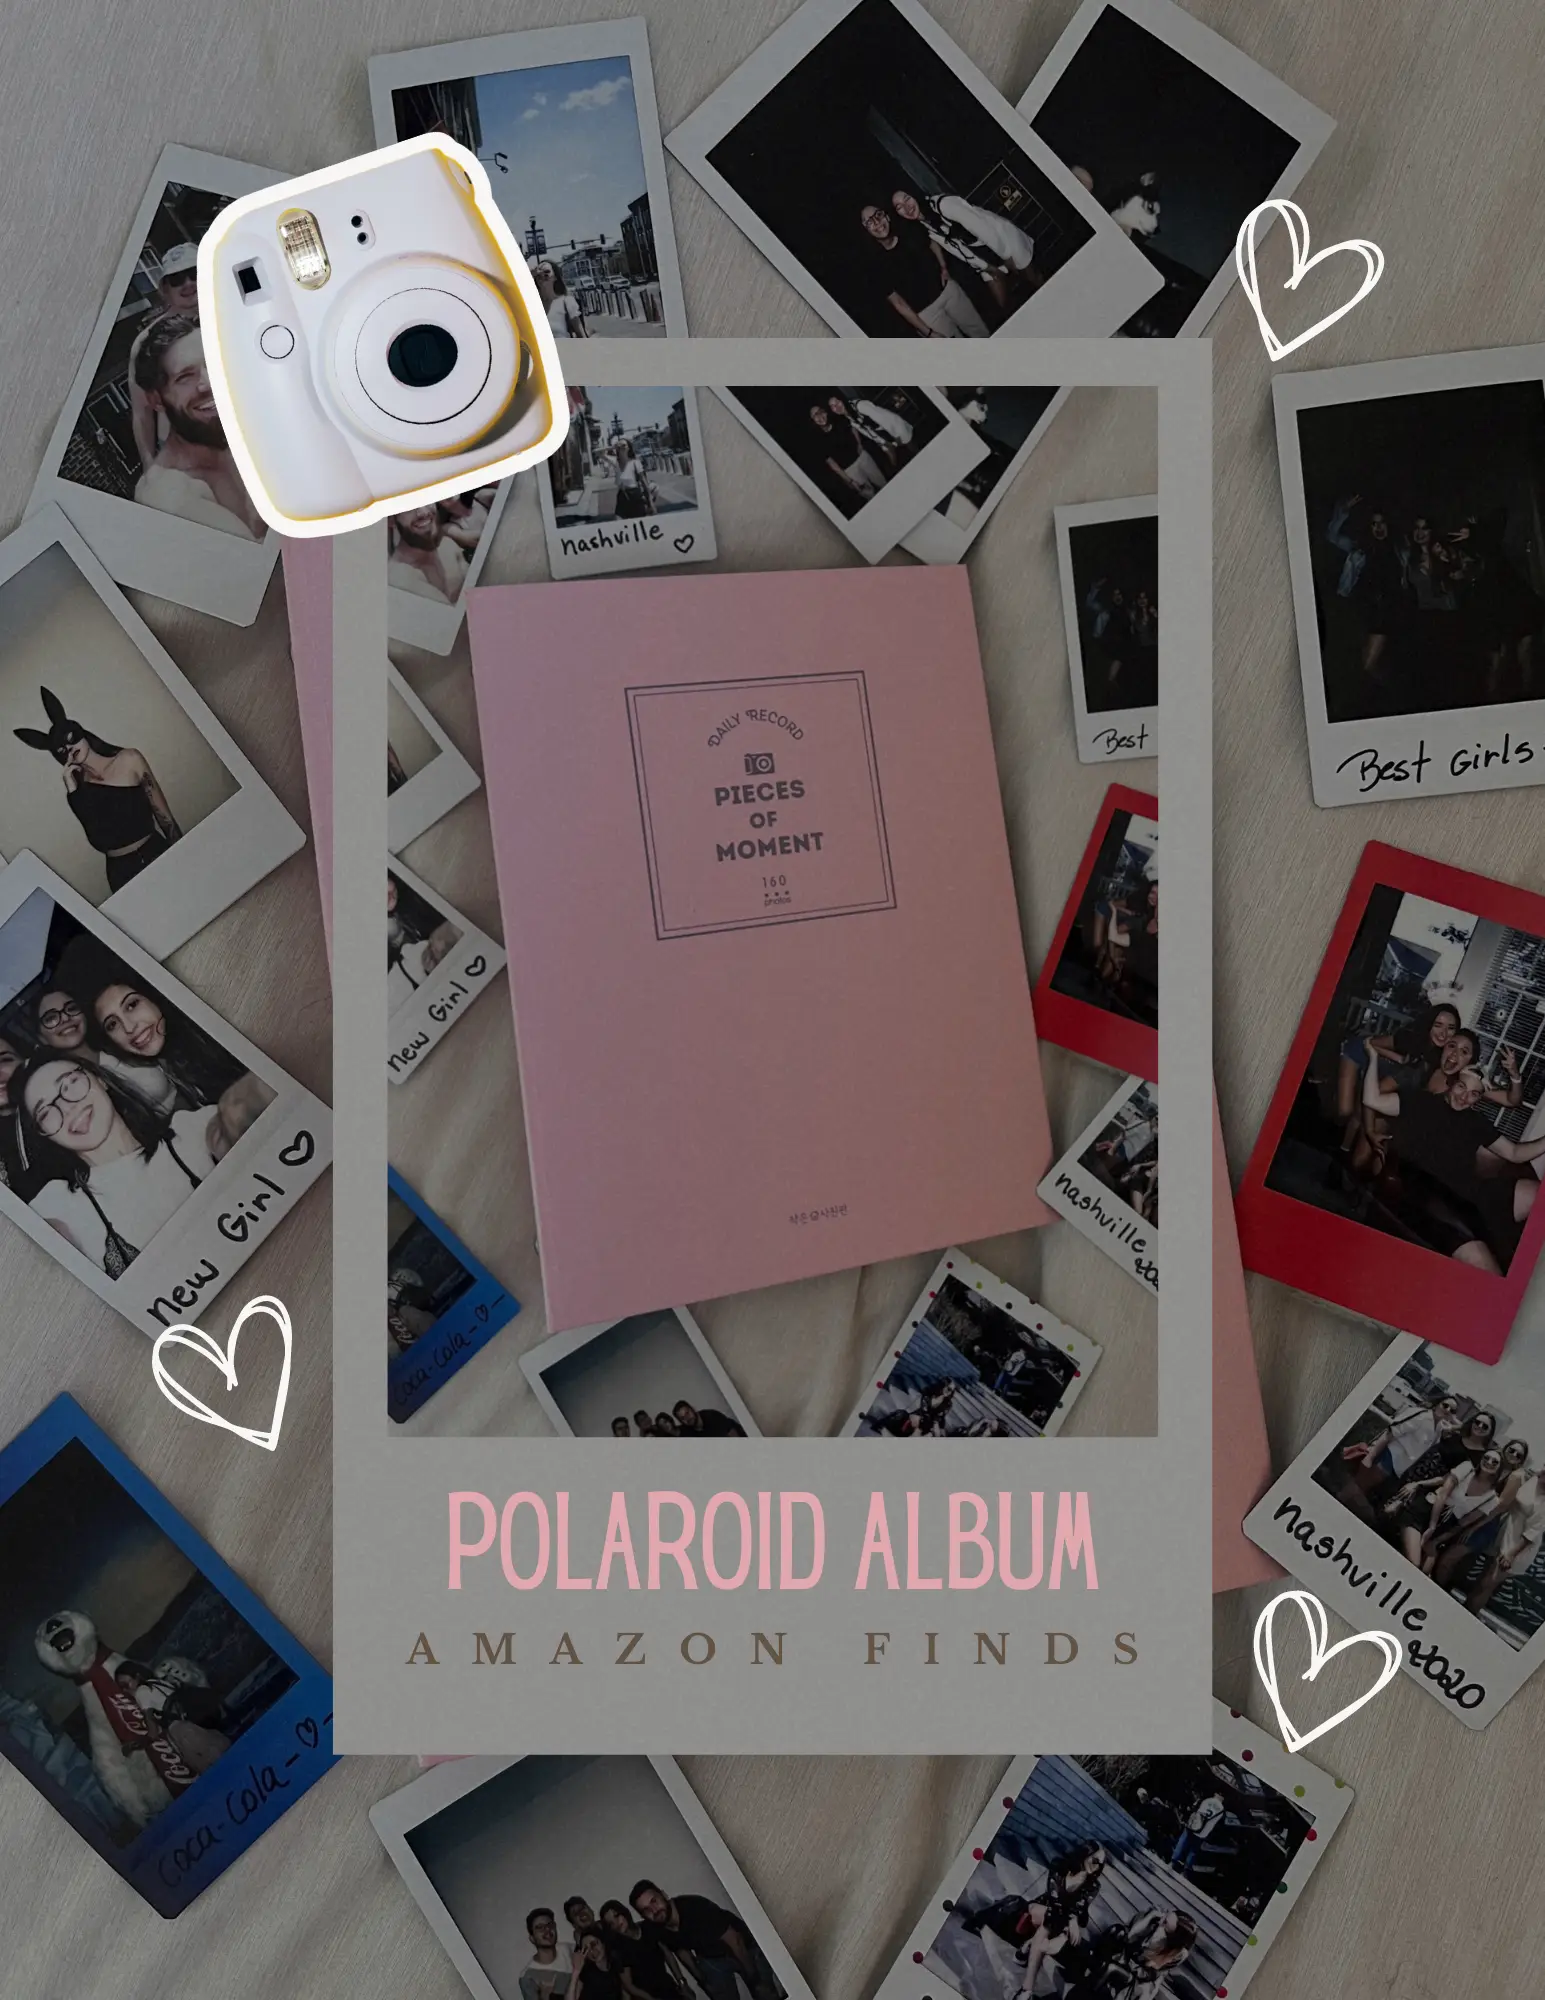 album foto polaroid anniversary - Lemon8 Search